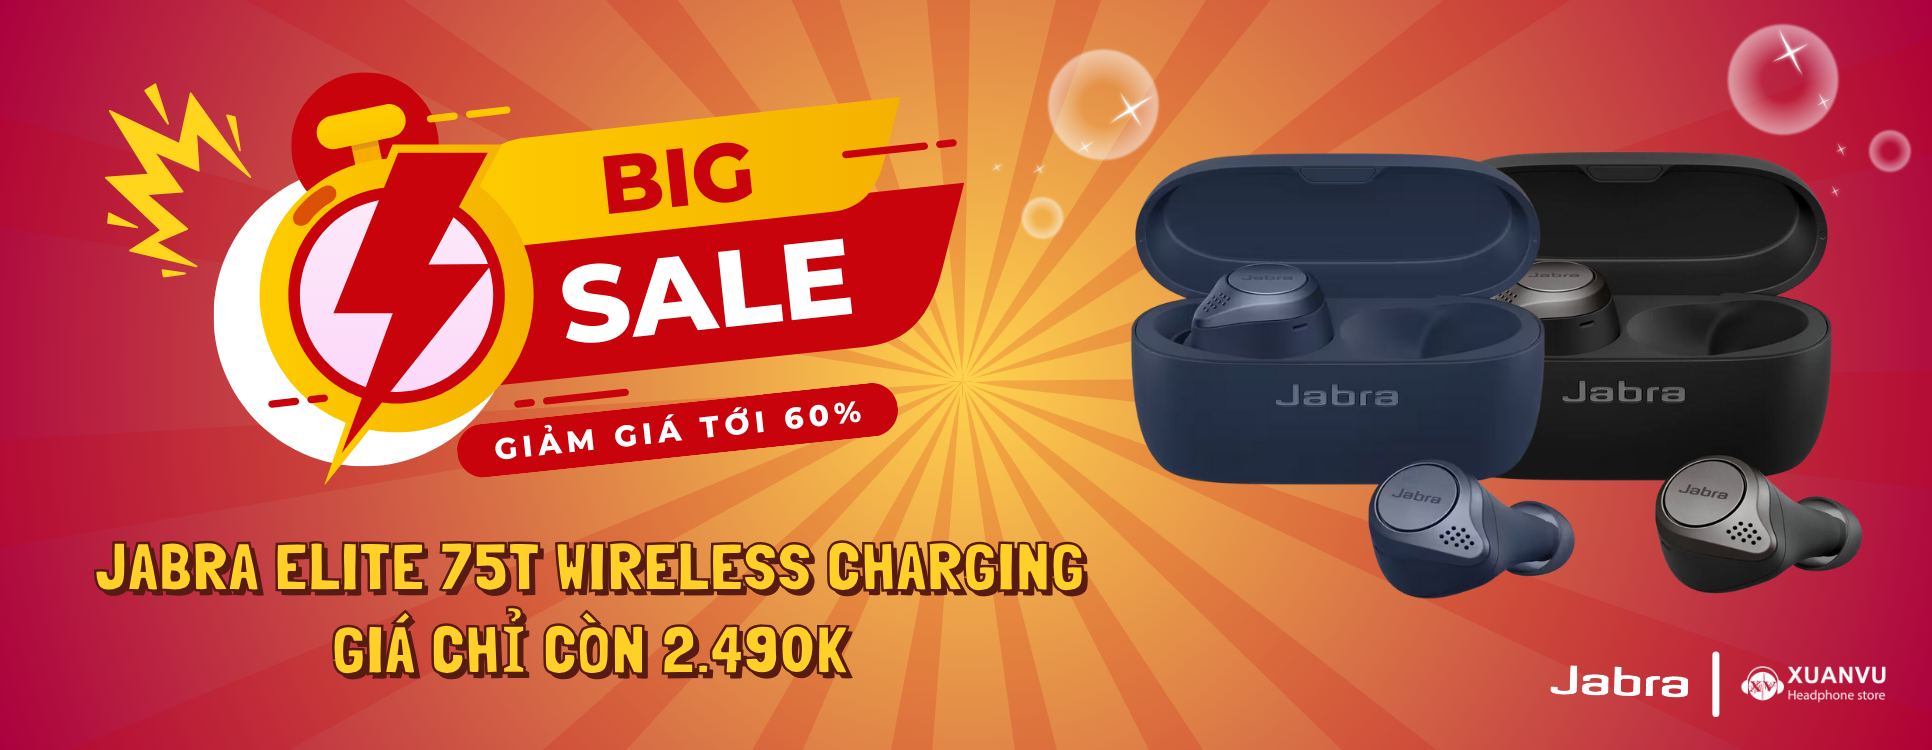 SALE SỐC 60% khi mua Jabra Elite 75t Wireless Charging